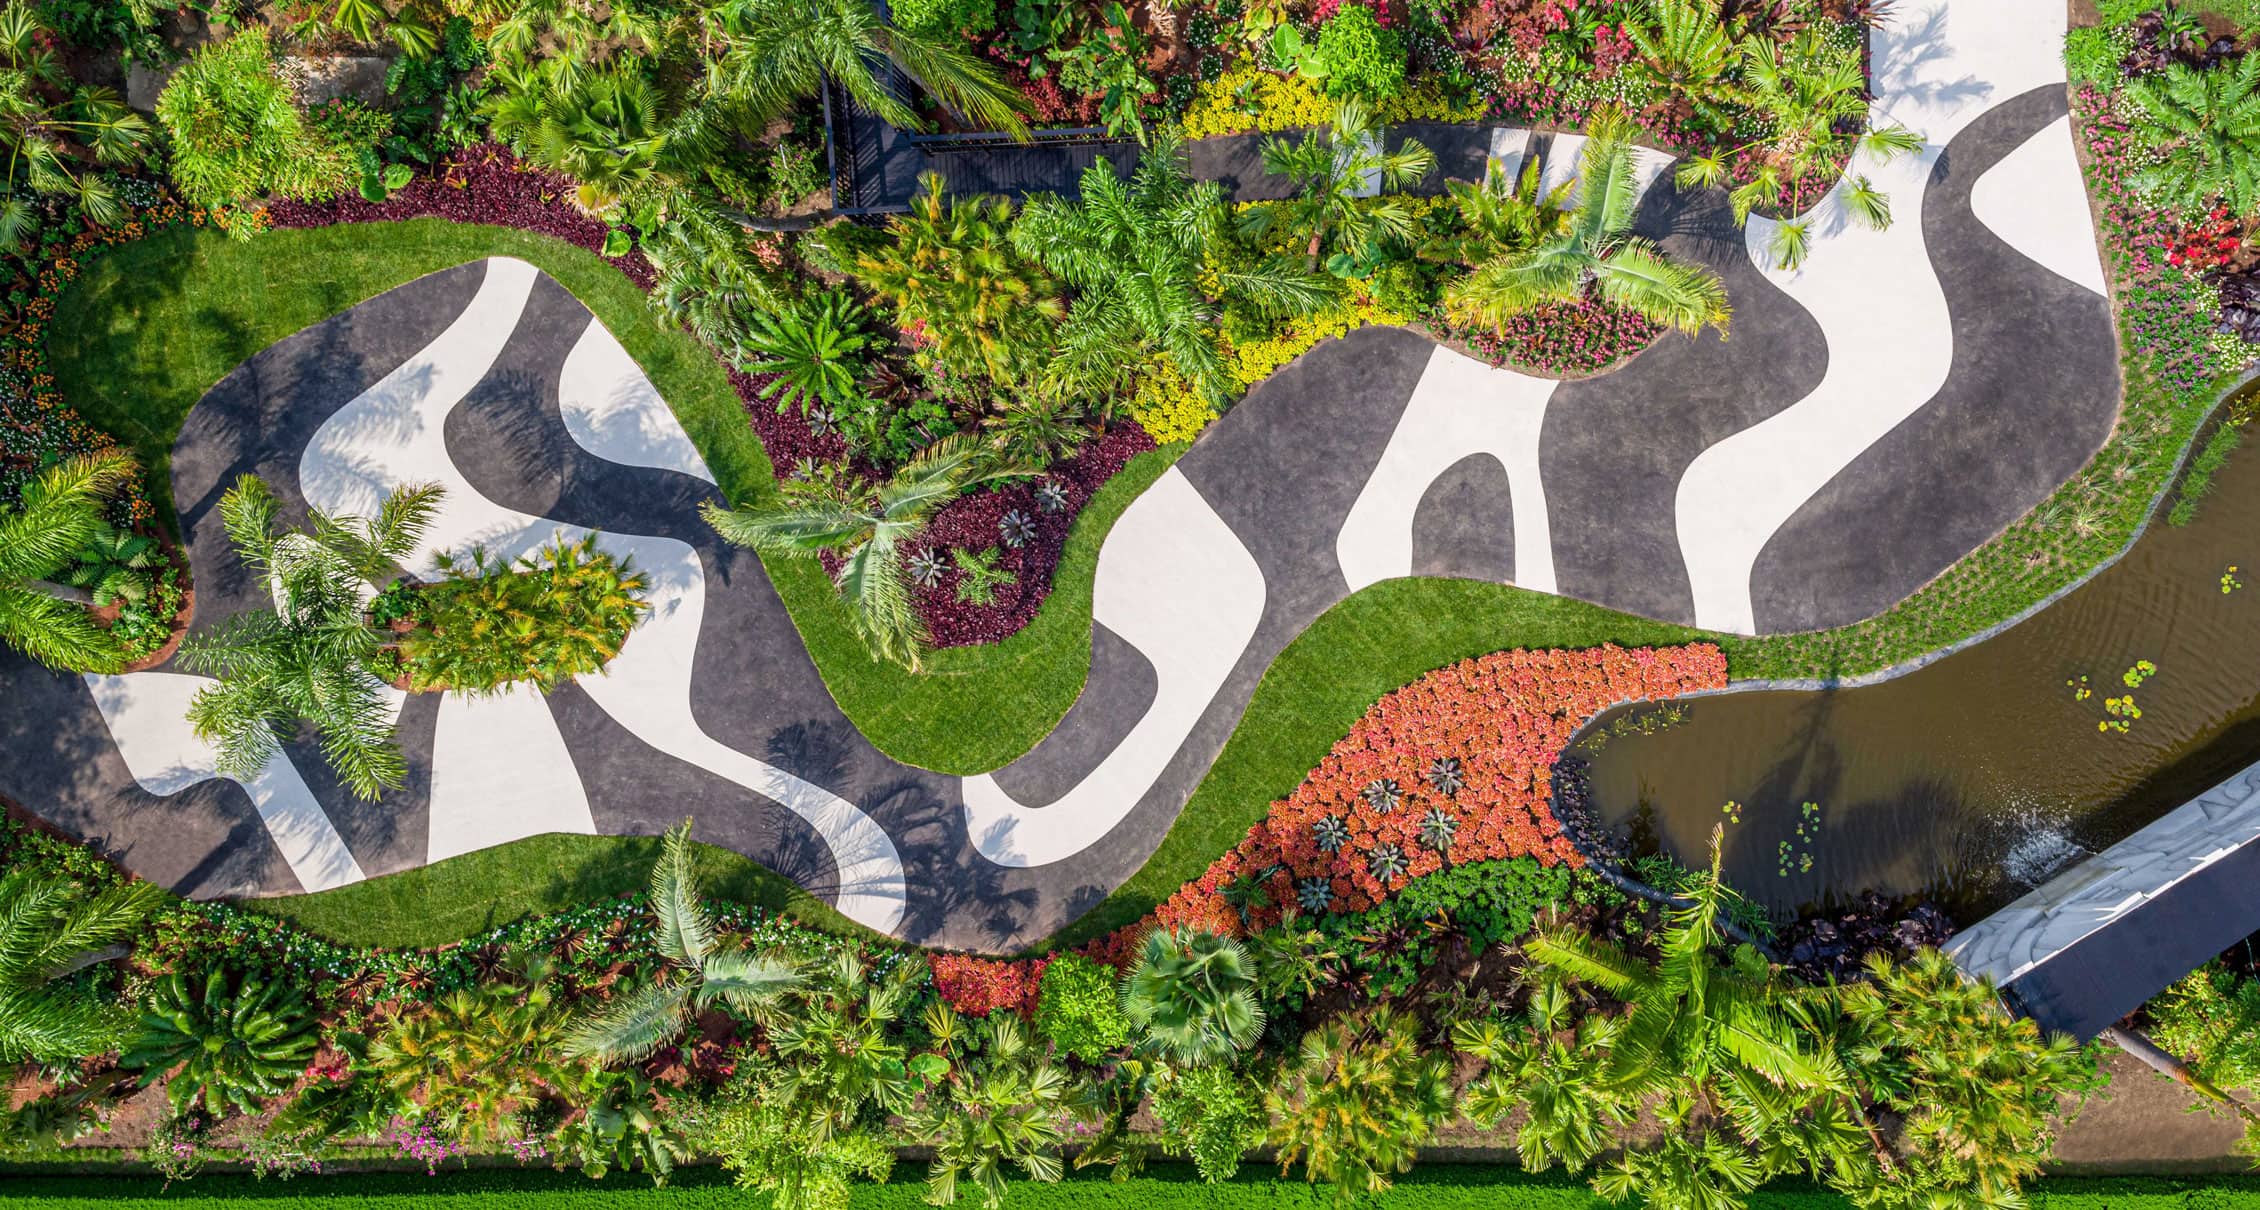 Brazilian Modern, The Living Art of Roberto Burle Marx at New York Botanical Garden